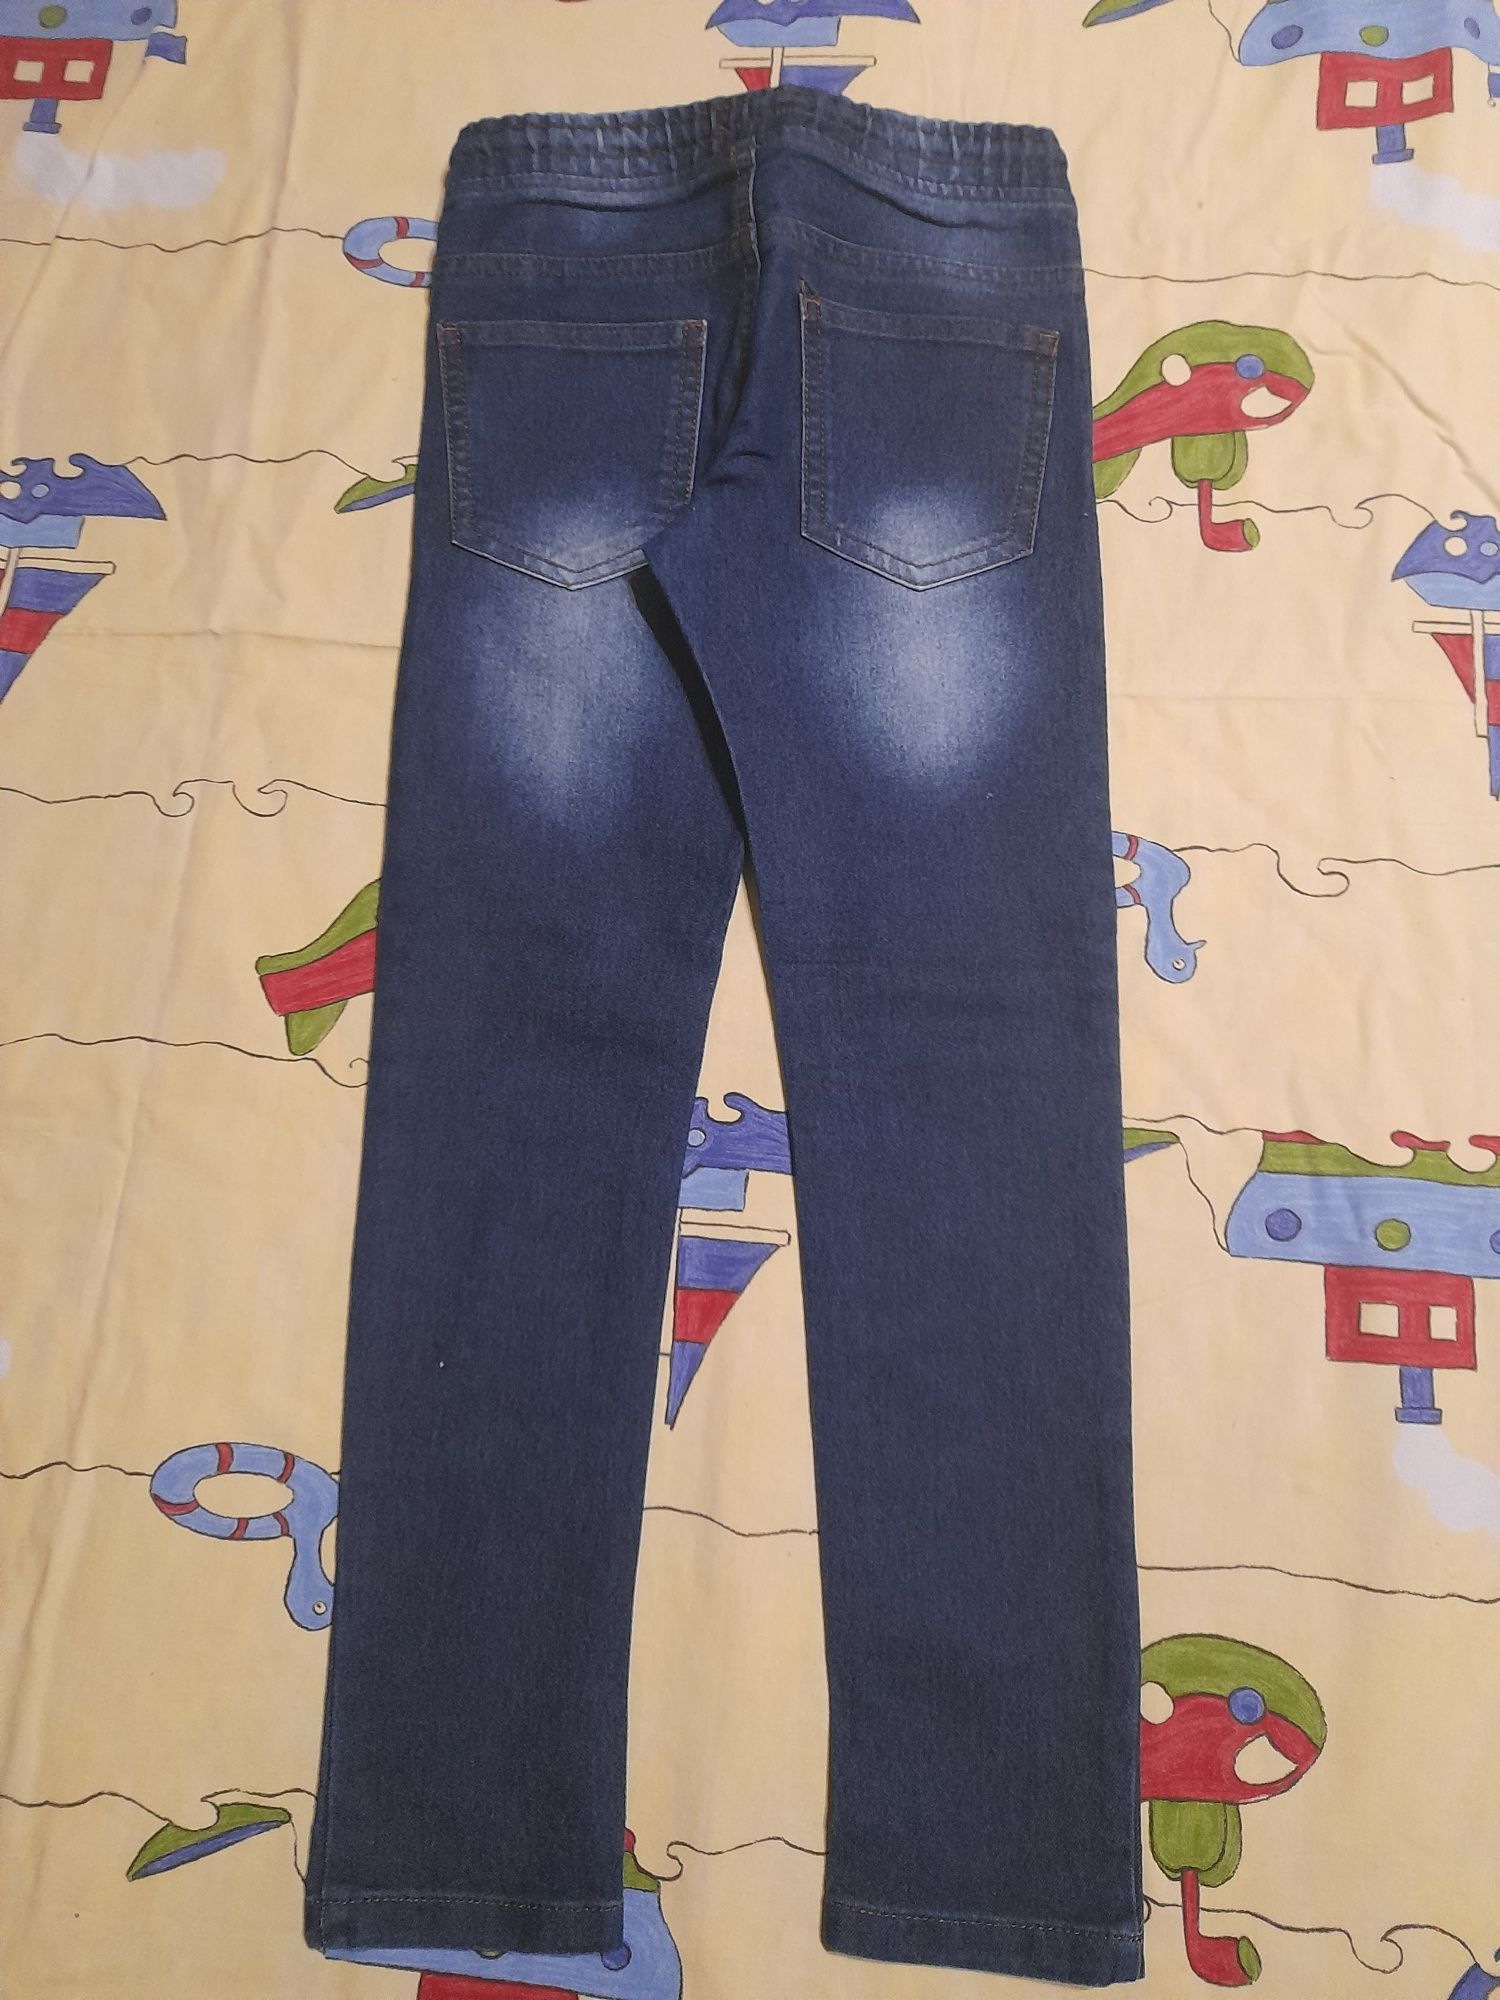 Pantaloni/Jeans baieti 128 cm